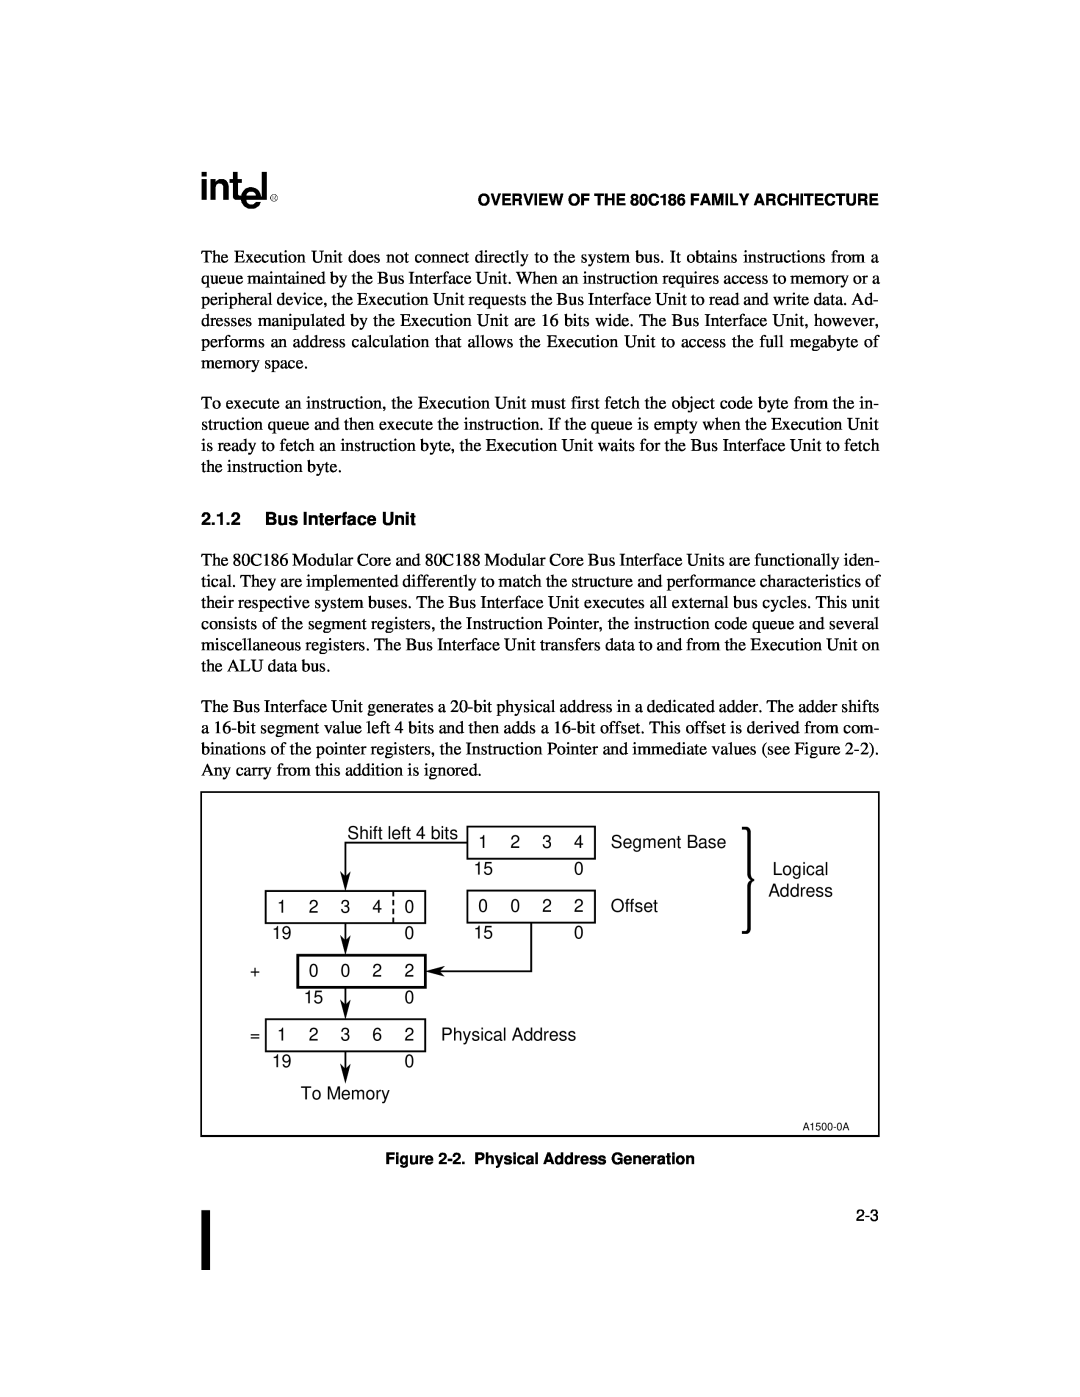 Intel 80C188XL, 80C186XL user manual 2.1.2Bus Interface Unit 